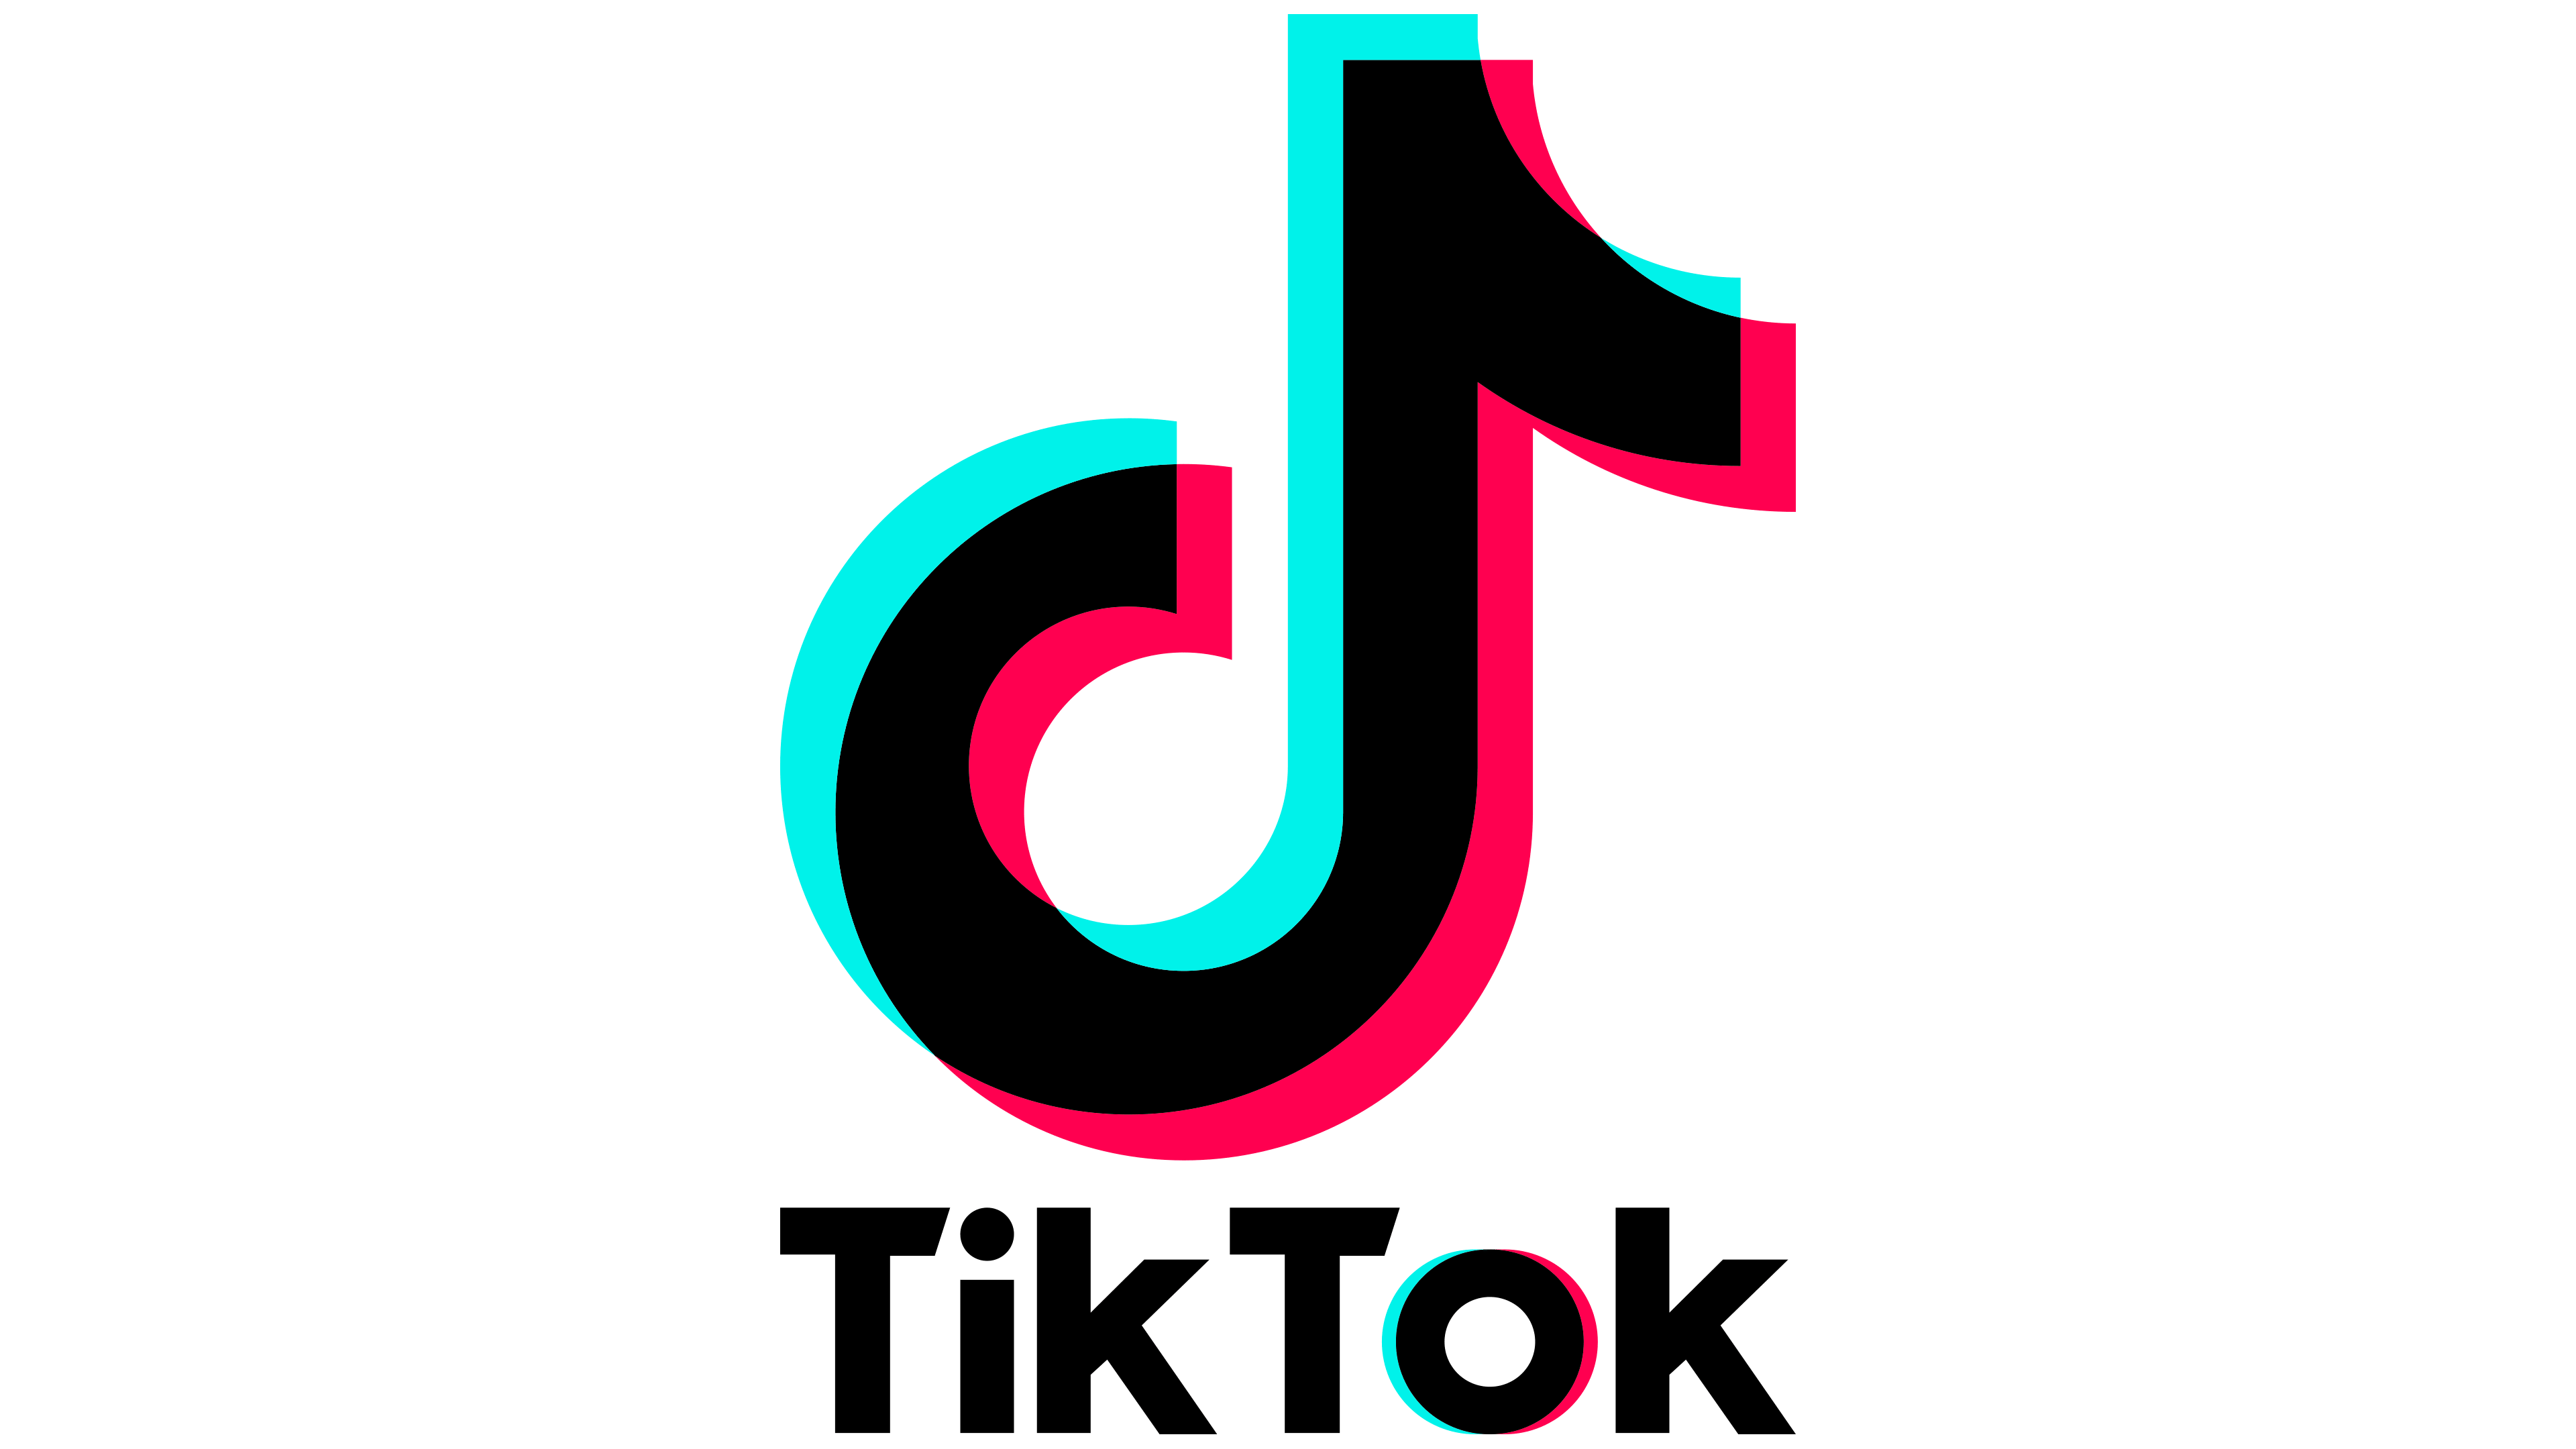 TikTok | Gavi, the Vaccine Alliance